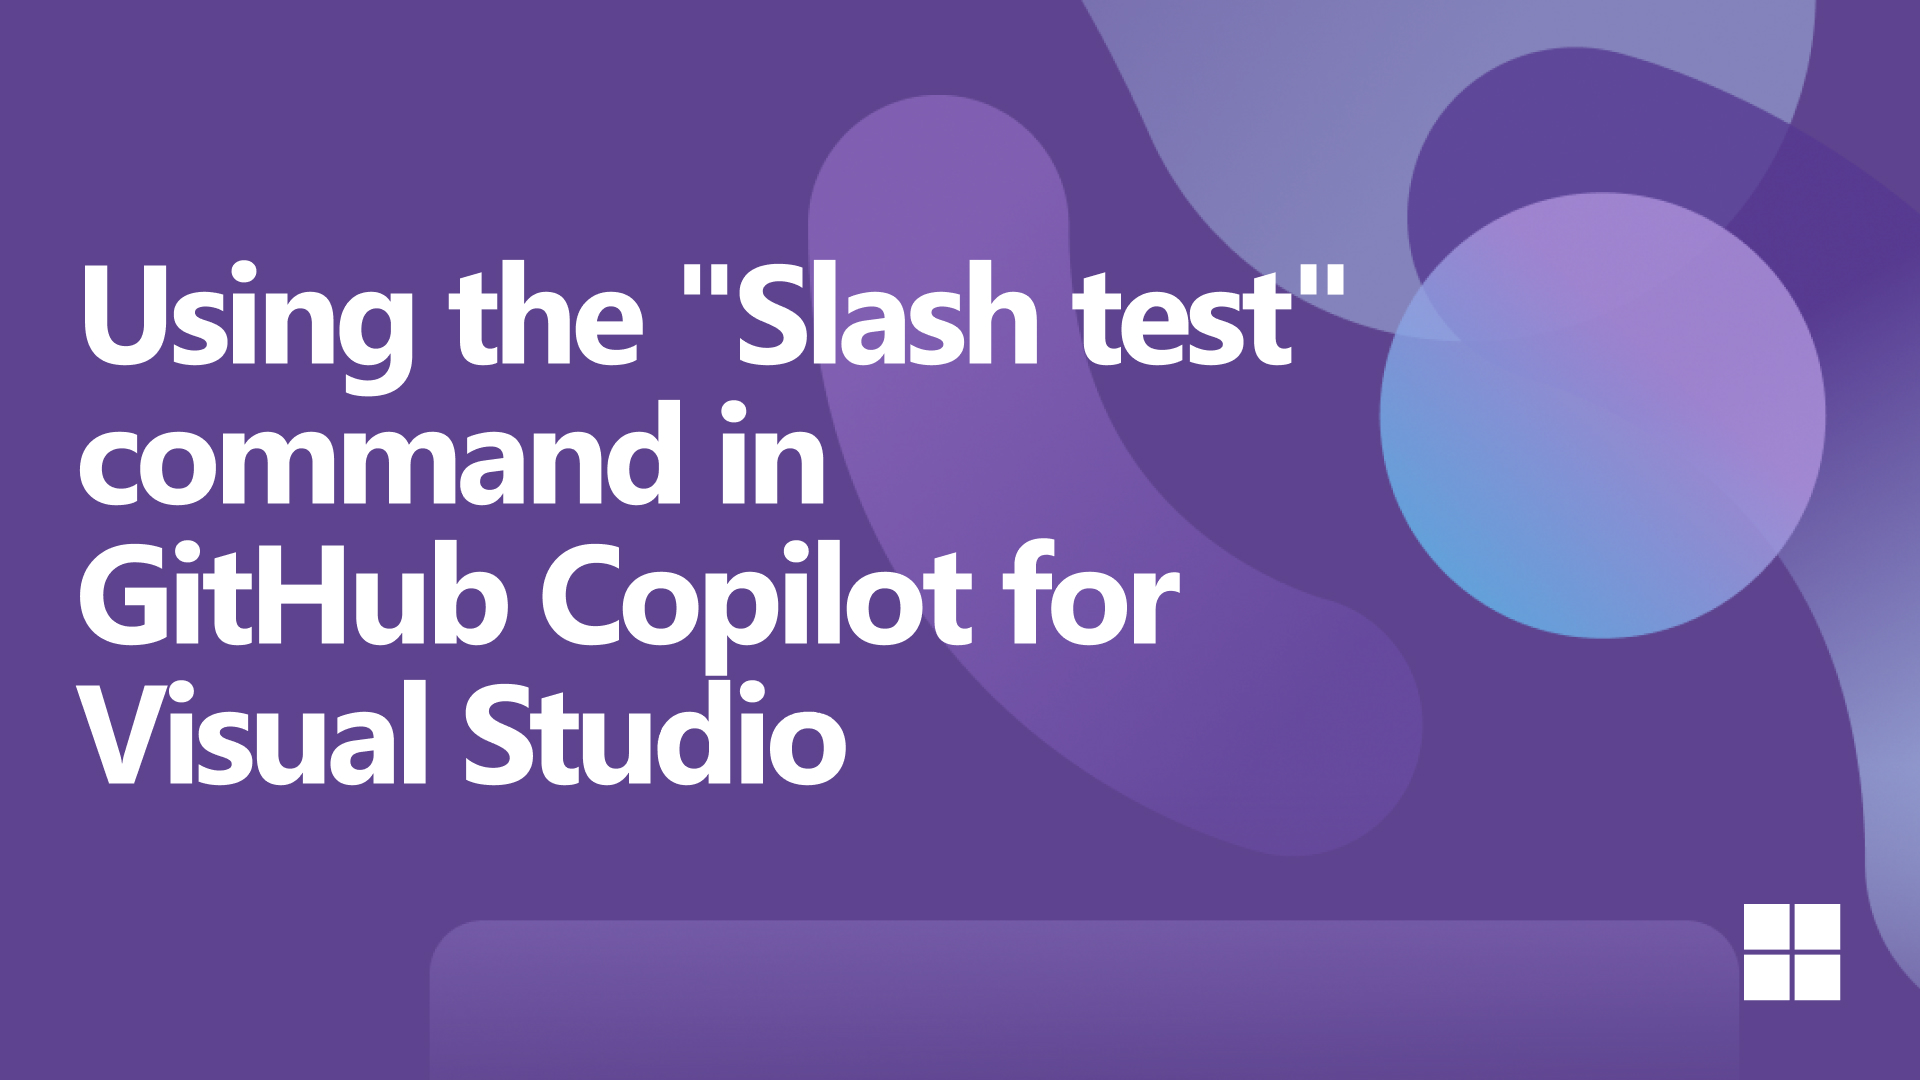 Using the "Slash test" command in GitHub Copilot for Visual Studio